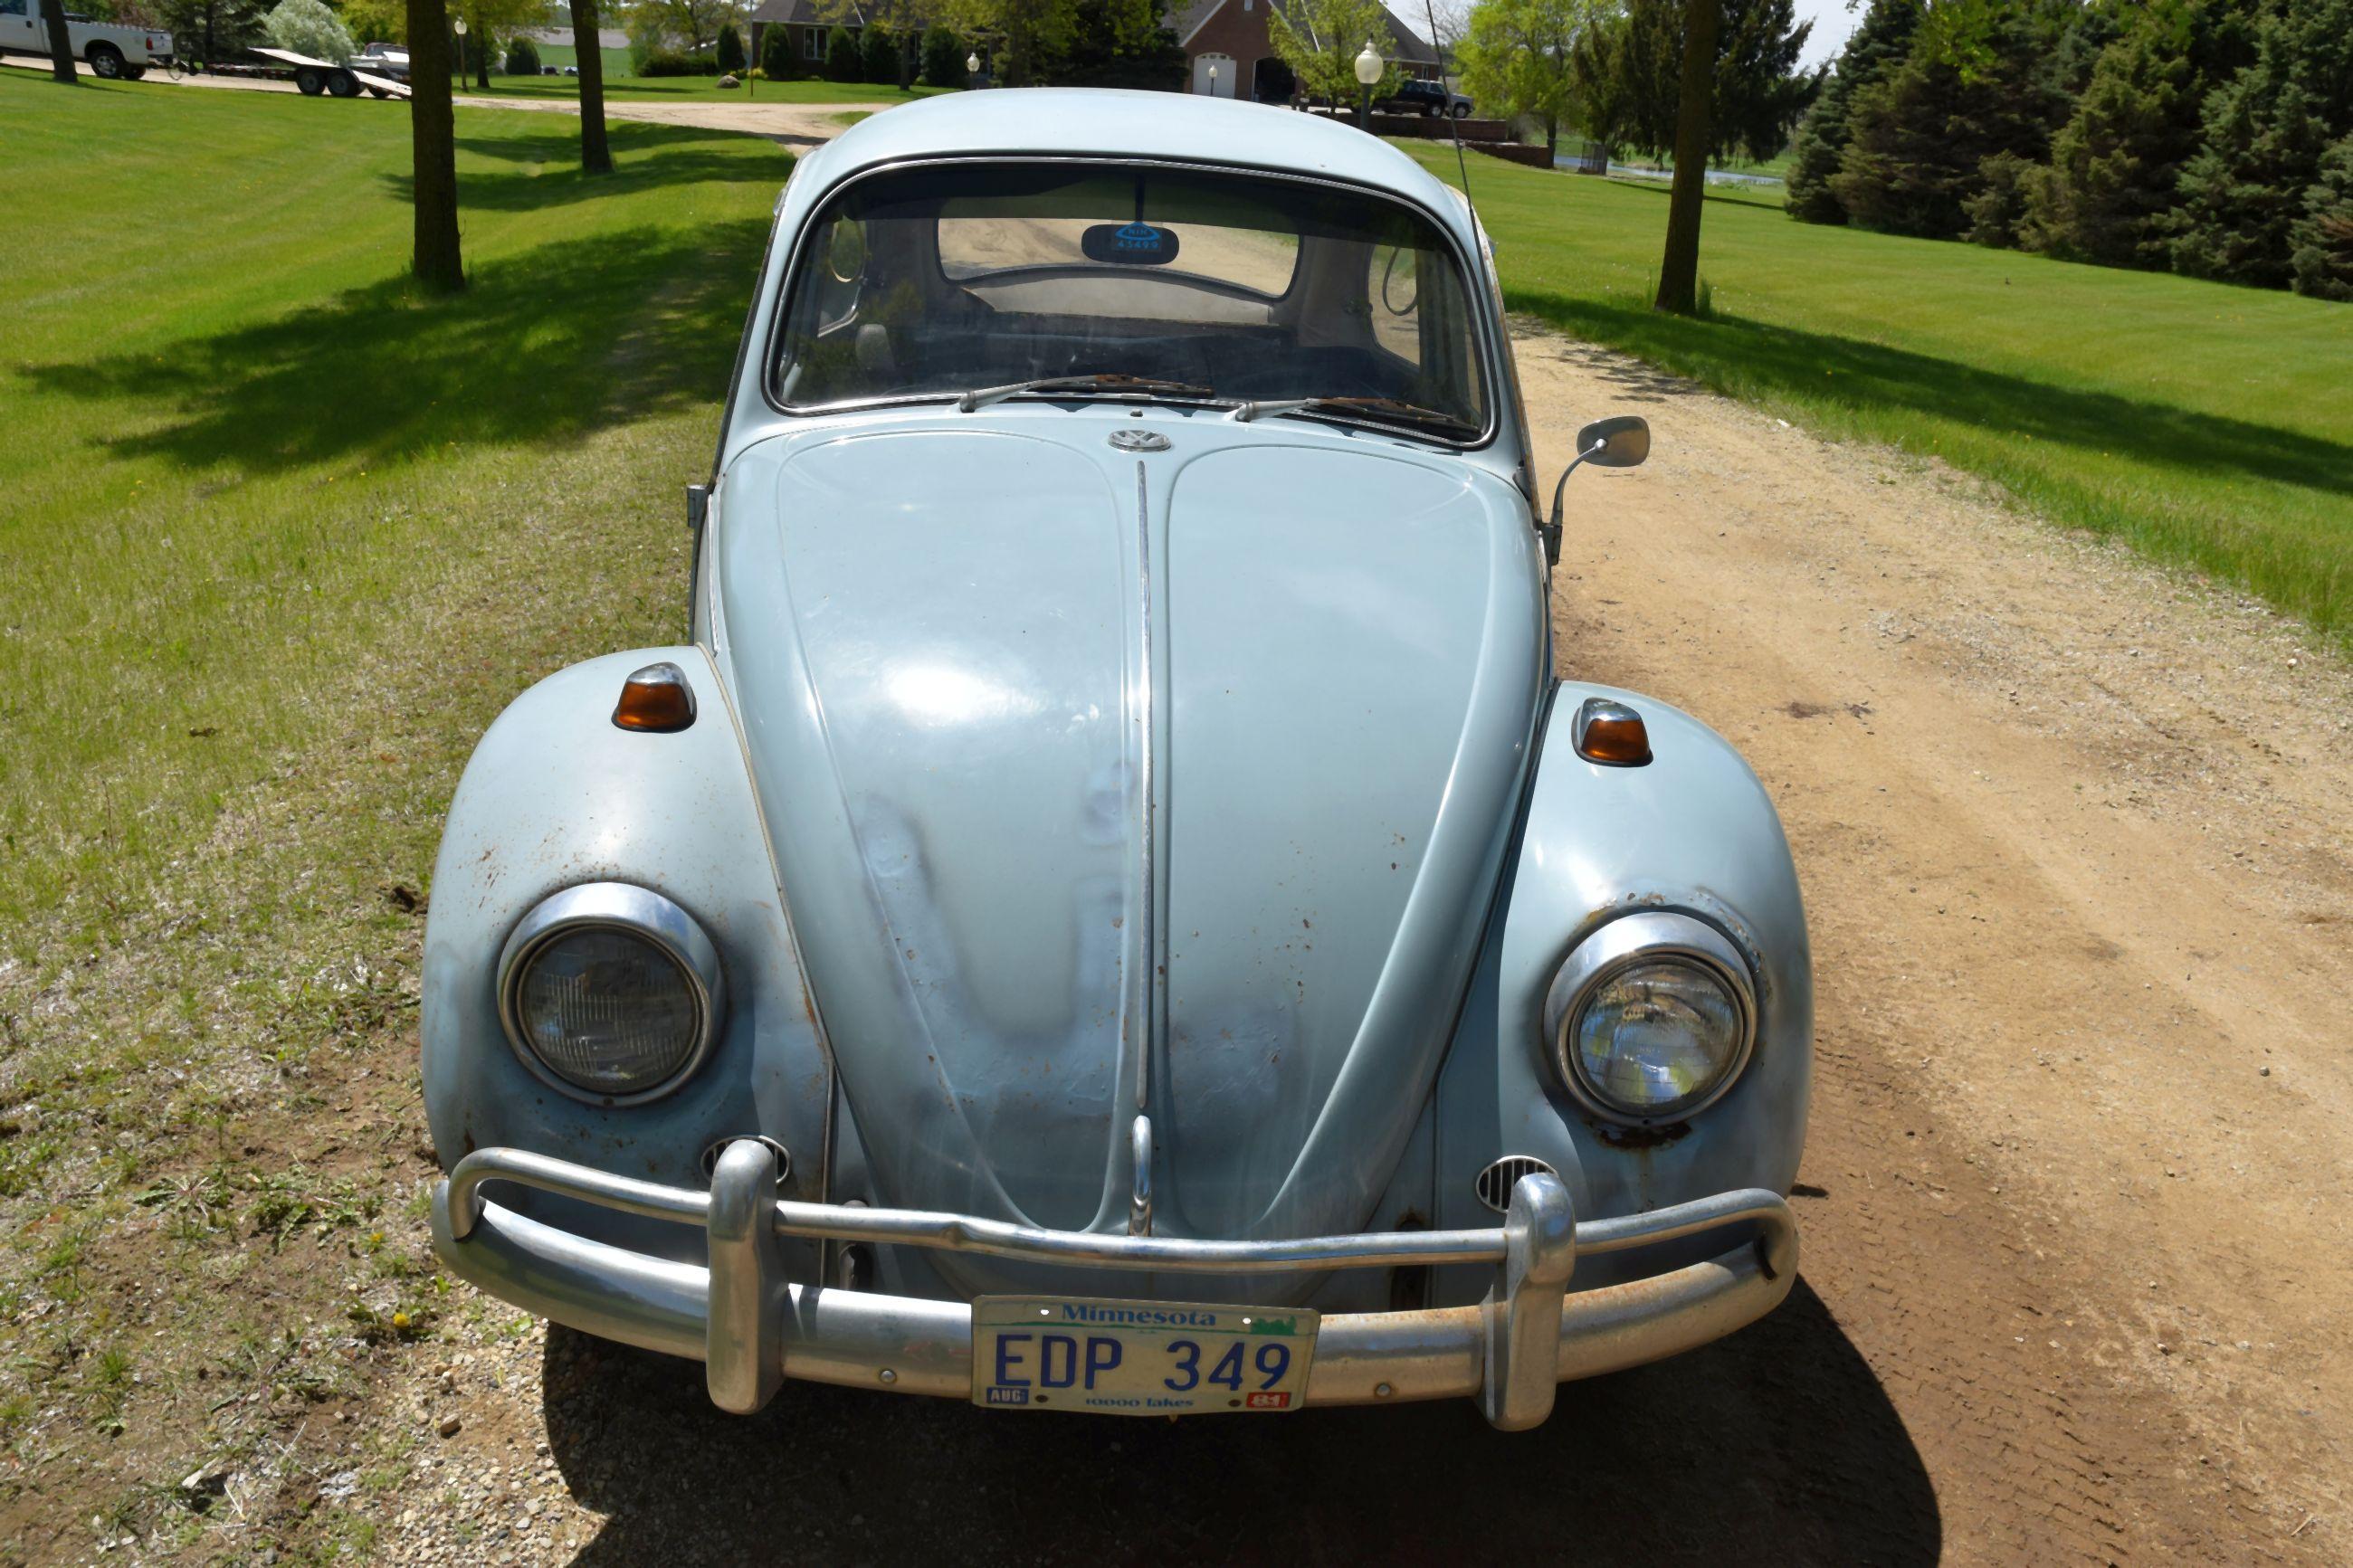 1967 VW Bug, 4sp, Engine Rebuilt 10+ Years Ago, Good Interior, Good Body, Non Running, Original Inte